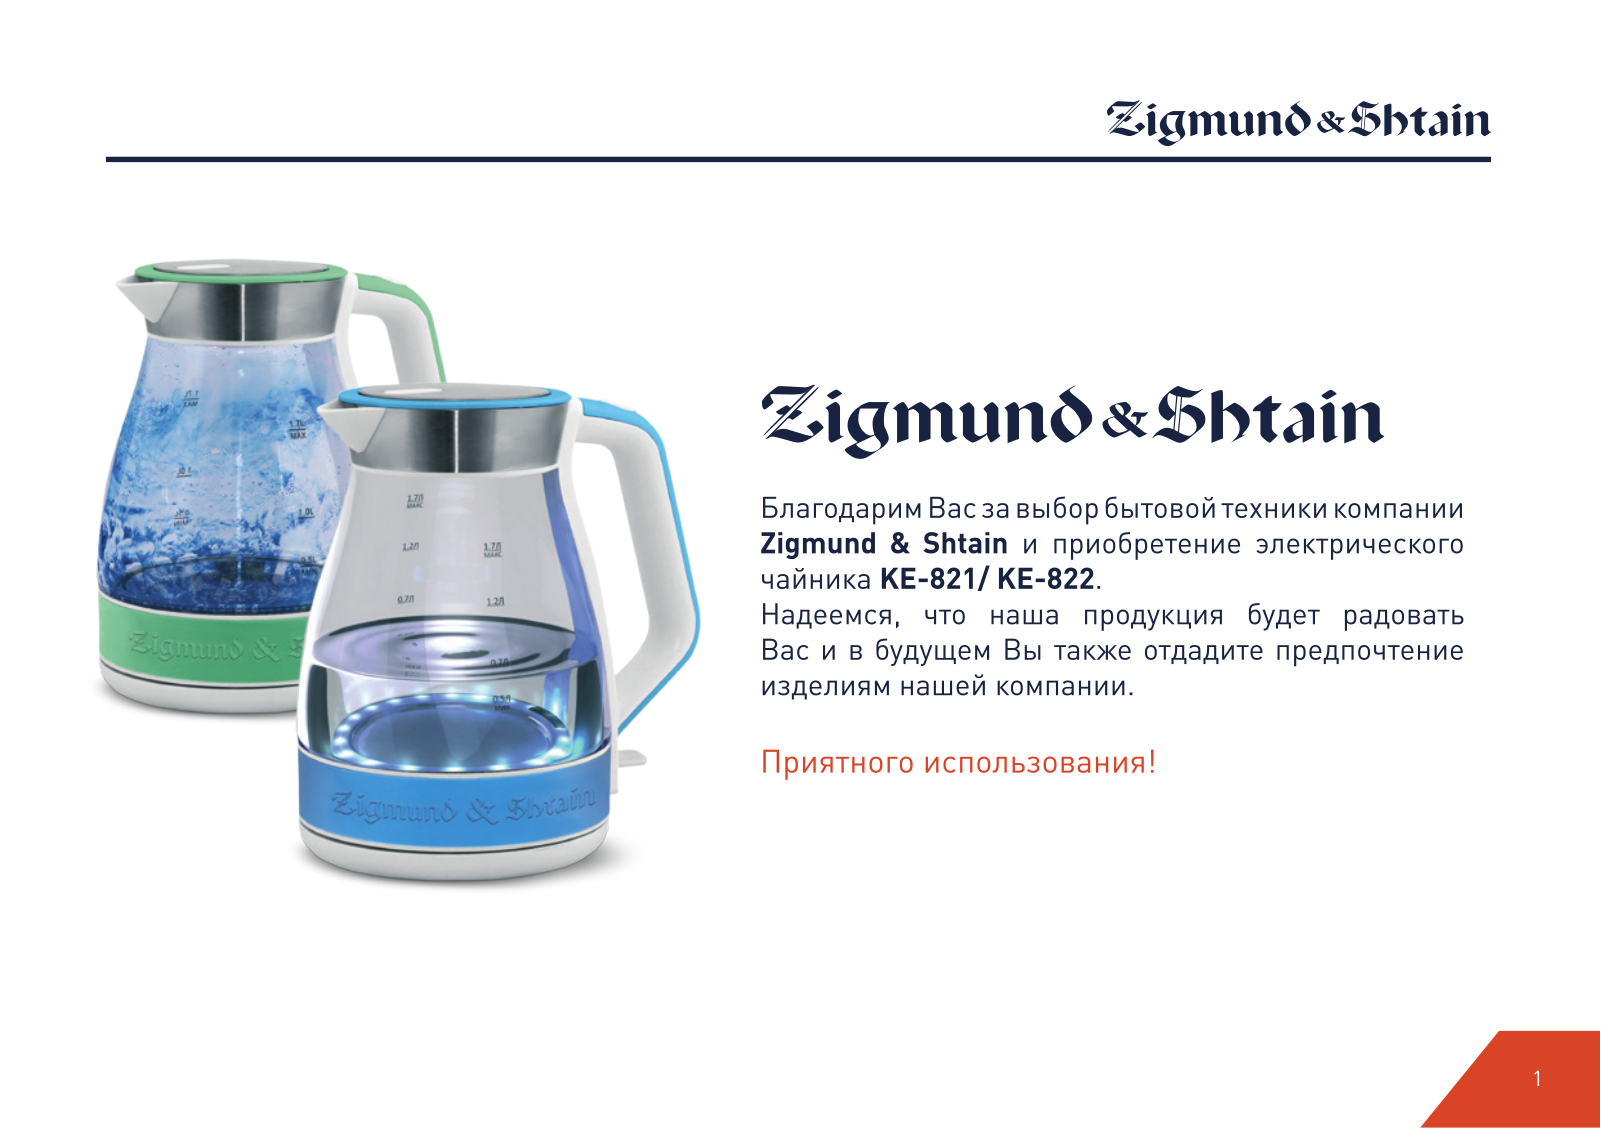 Zigmund shtain KE-821 User Manual